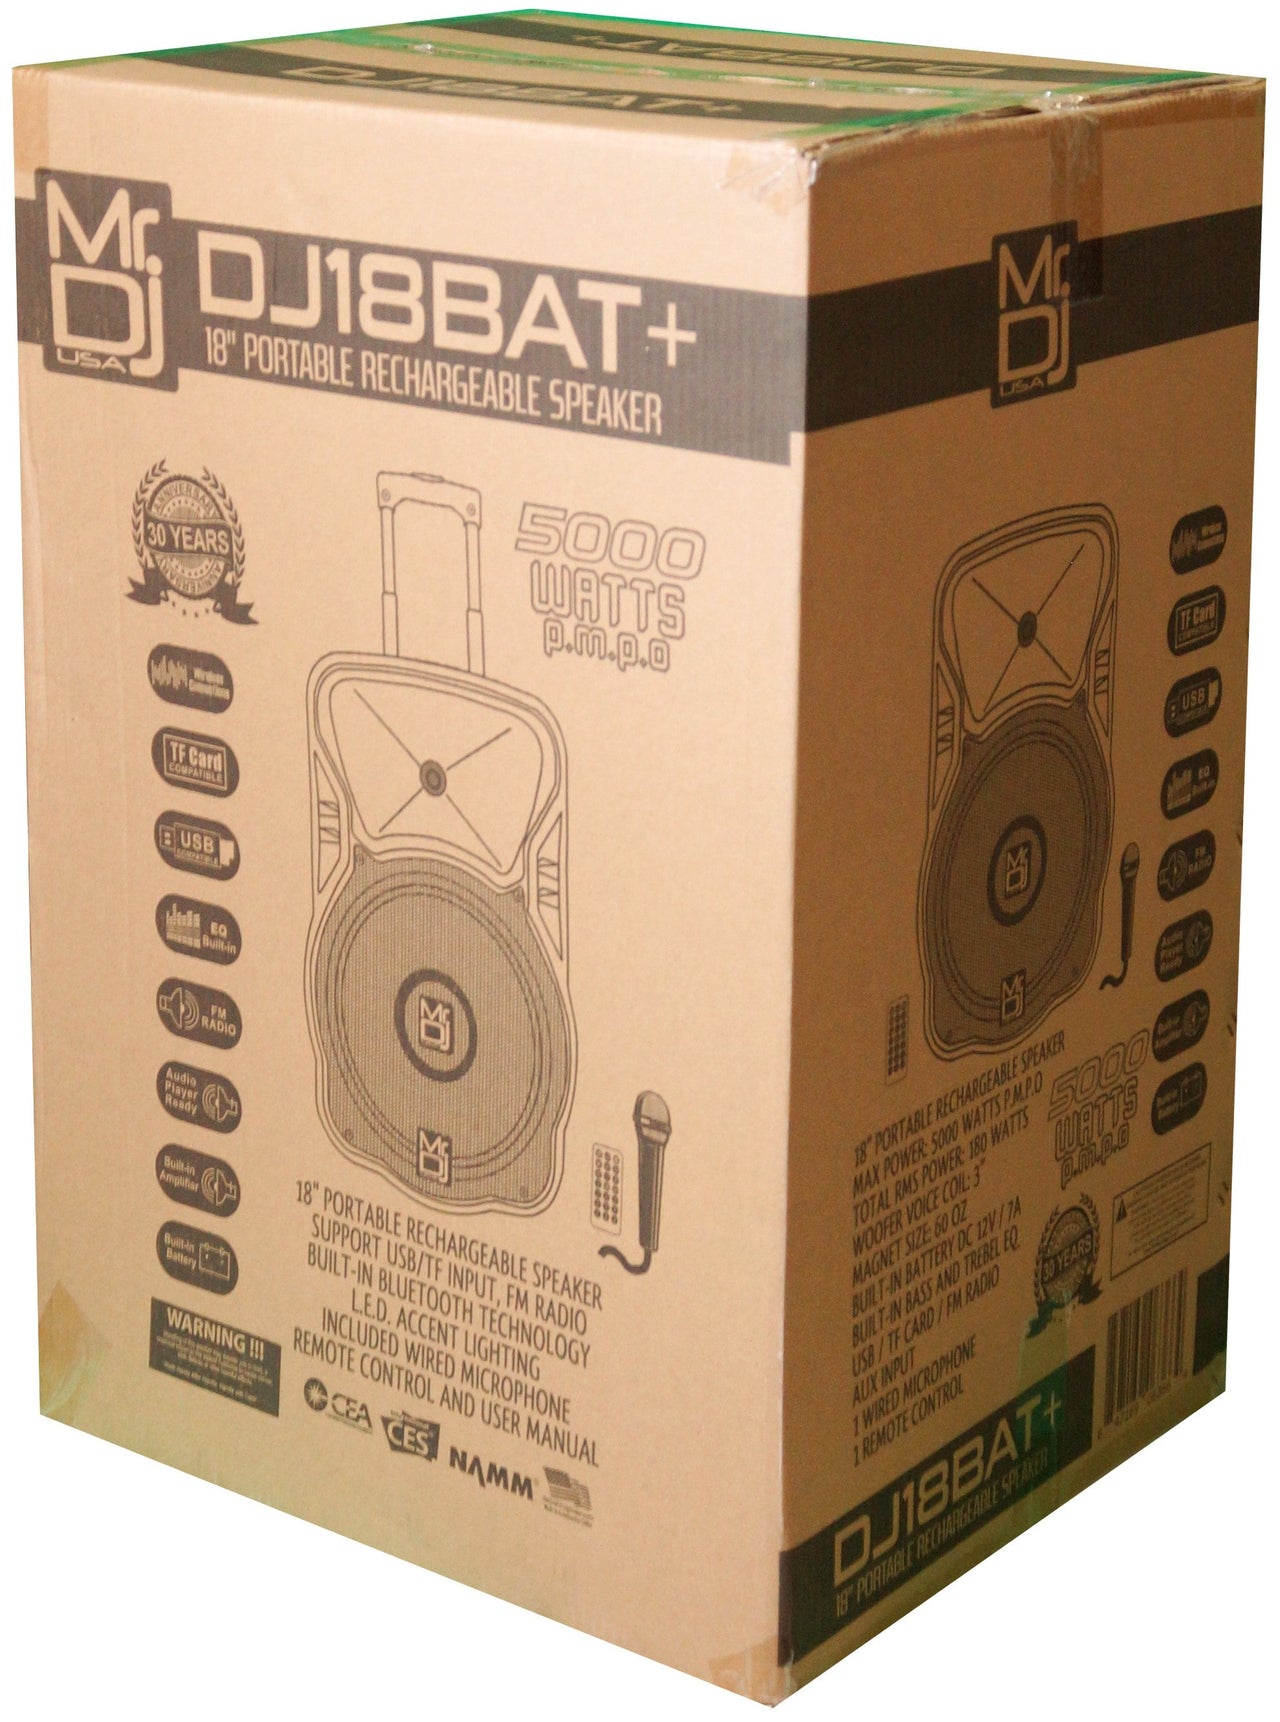 MR DJ DJ18BAT+ 18" Portable Bluetooth Speaker + Speaker Stand + 54-LED Slim Par Wash DJ Light